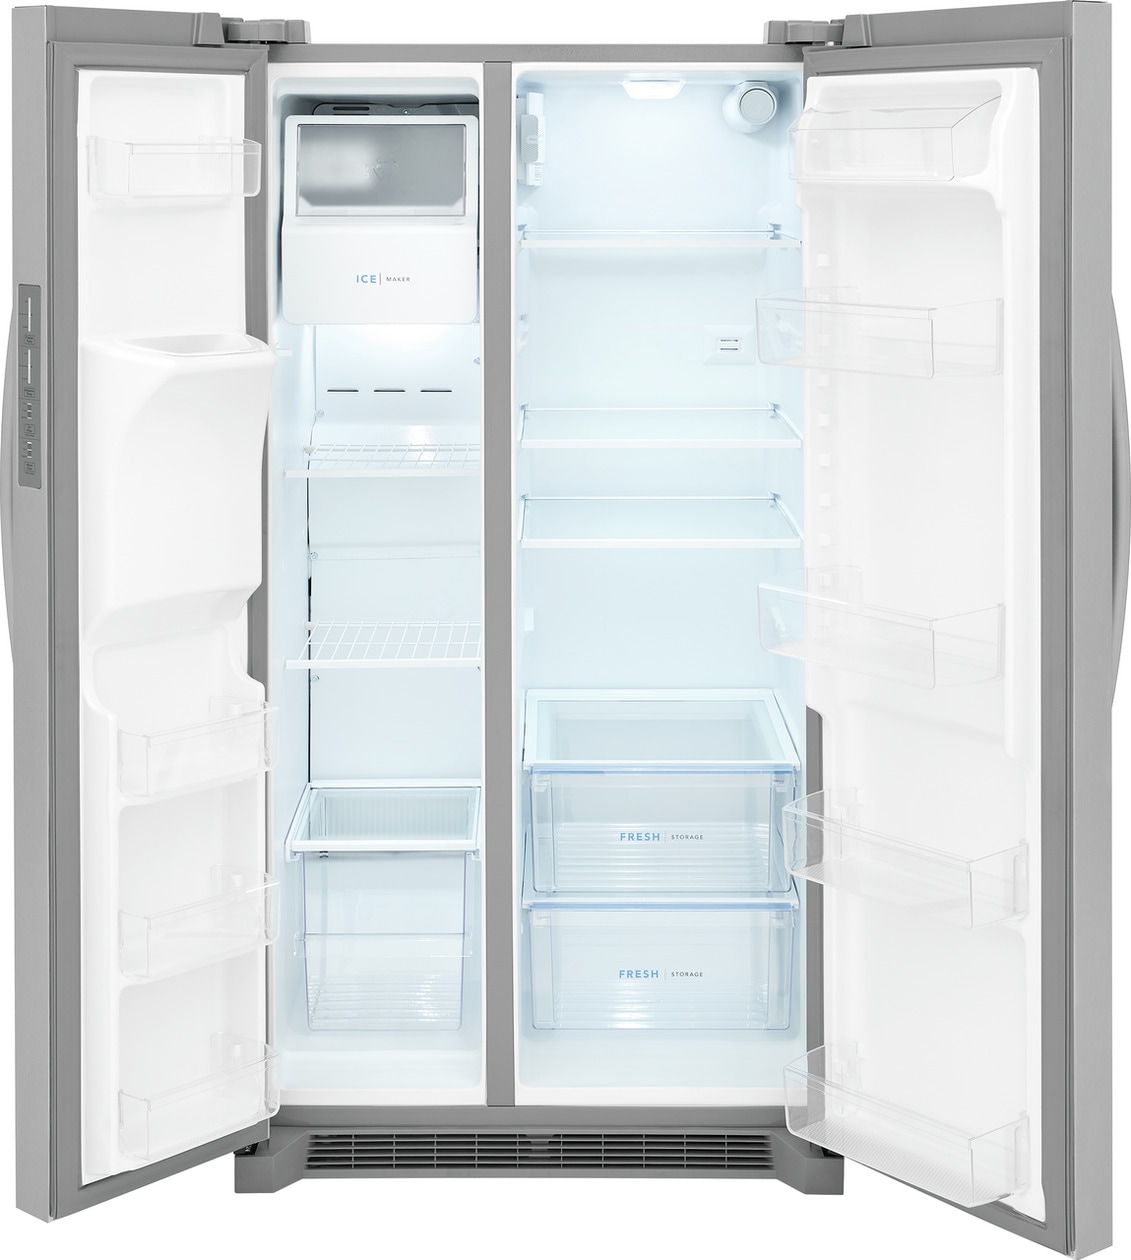 Refrigerators at Lowe's